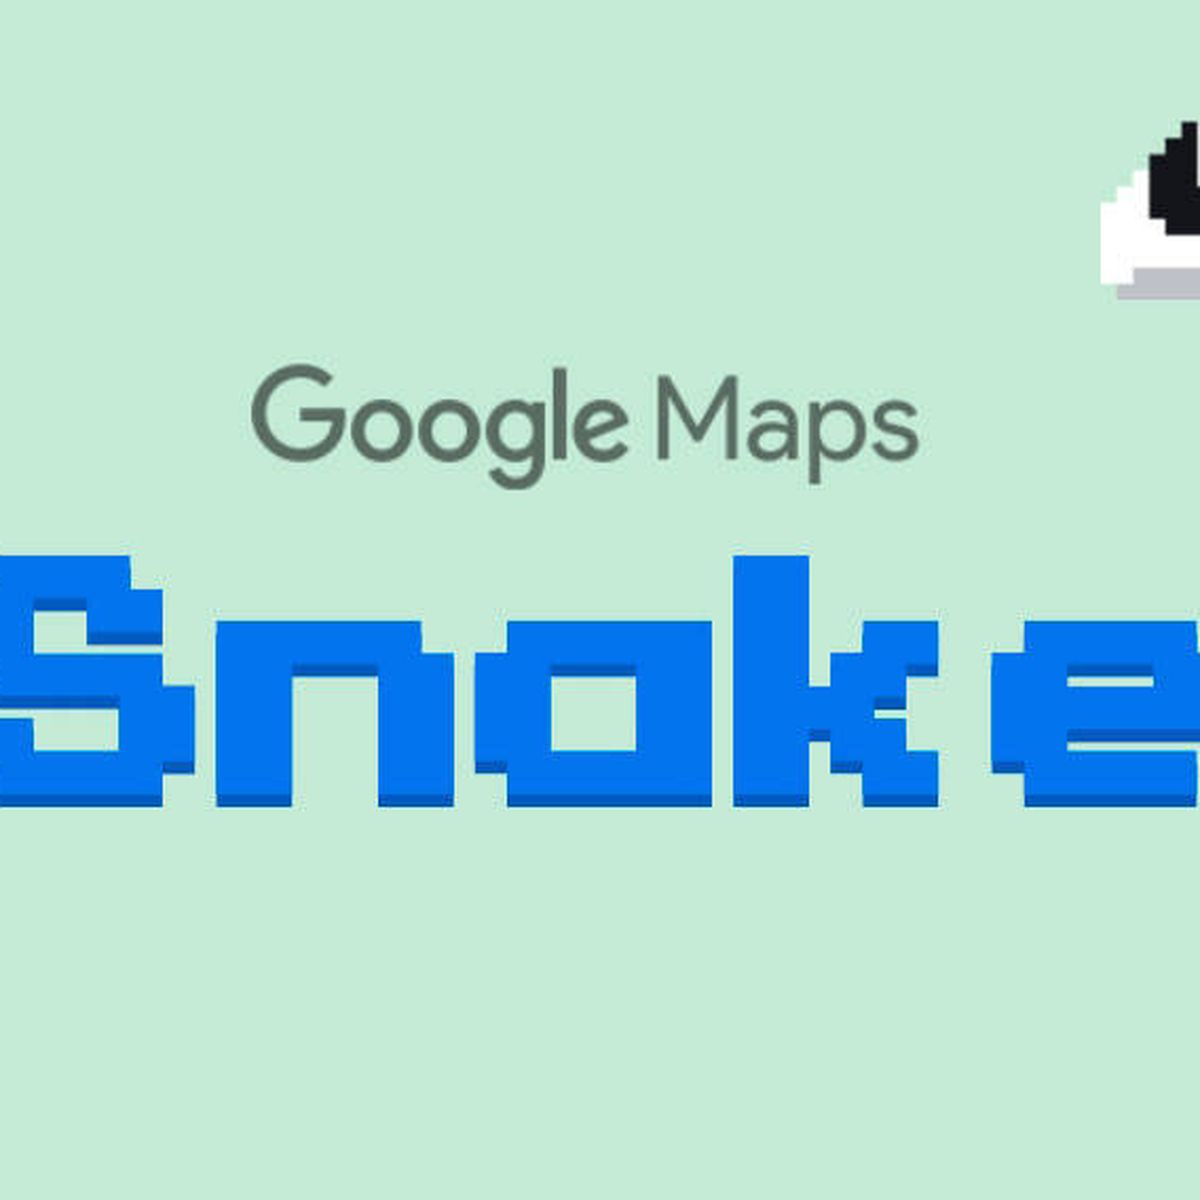 Snake su Google Maps, come giocare